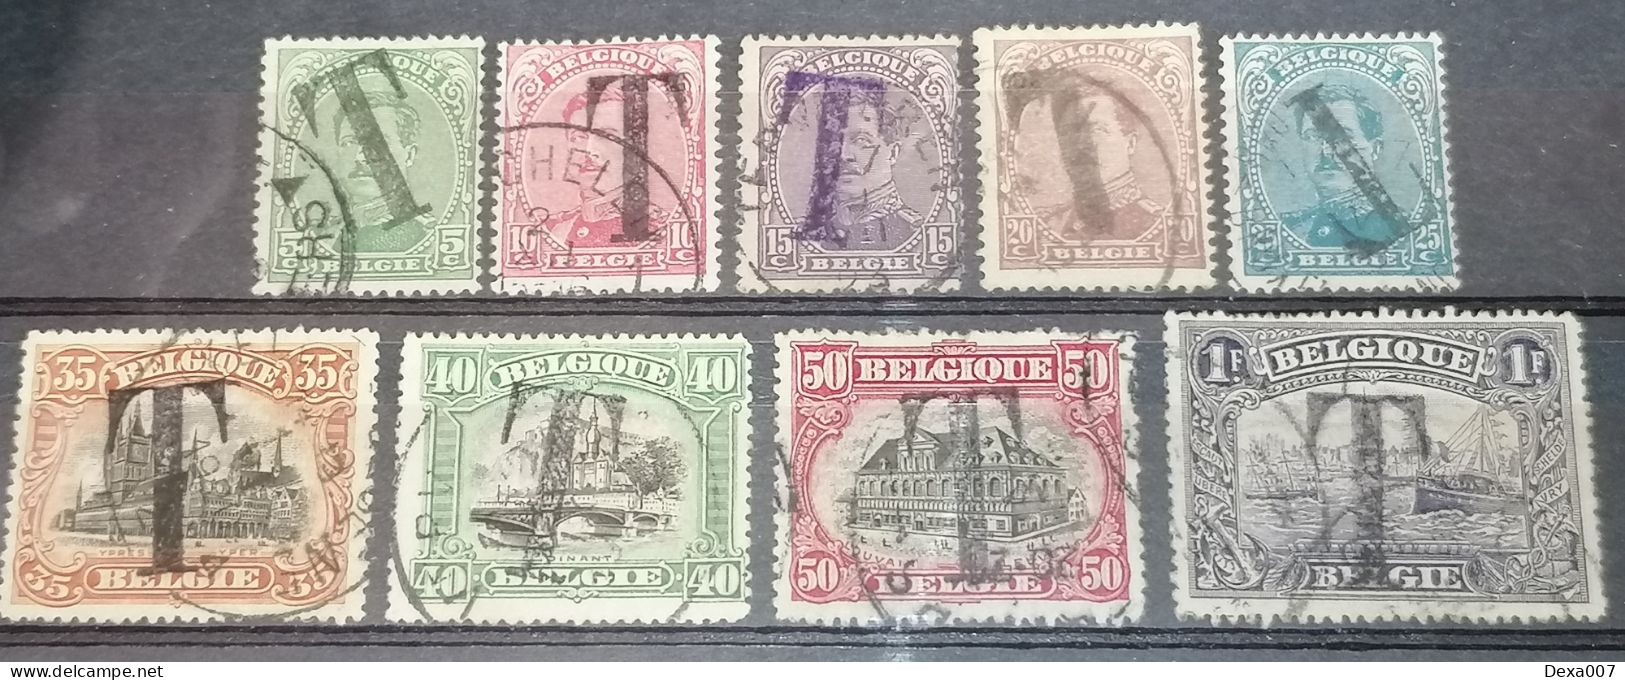 Belgium 1919 Postage Due Set - Stamps